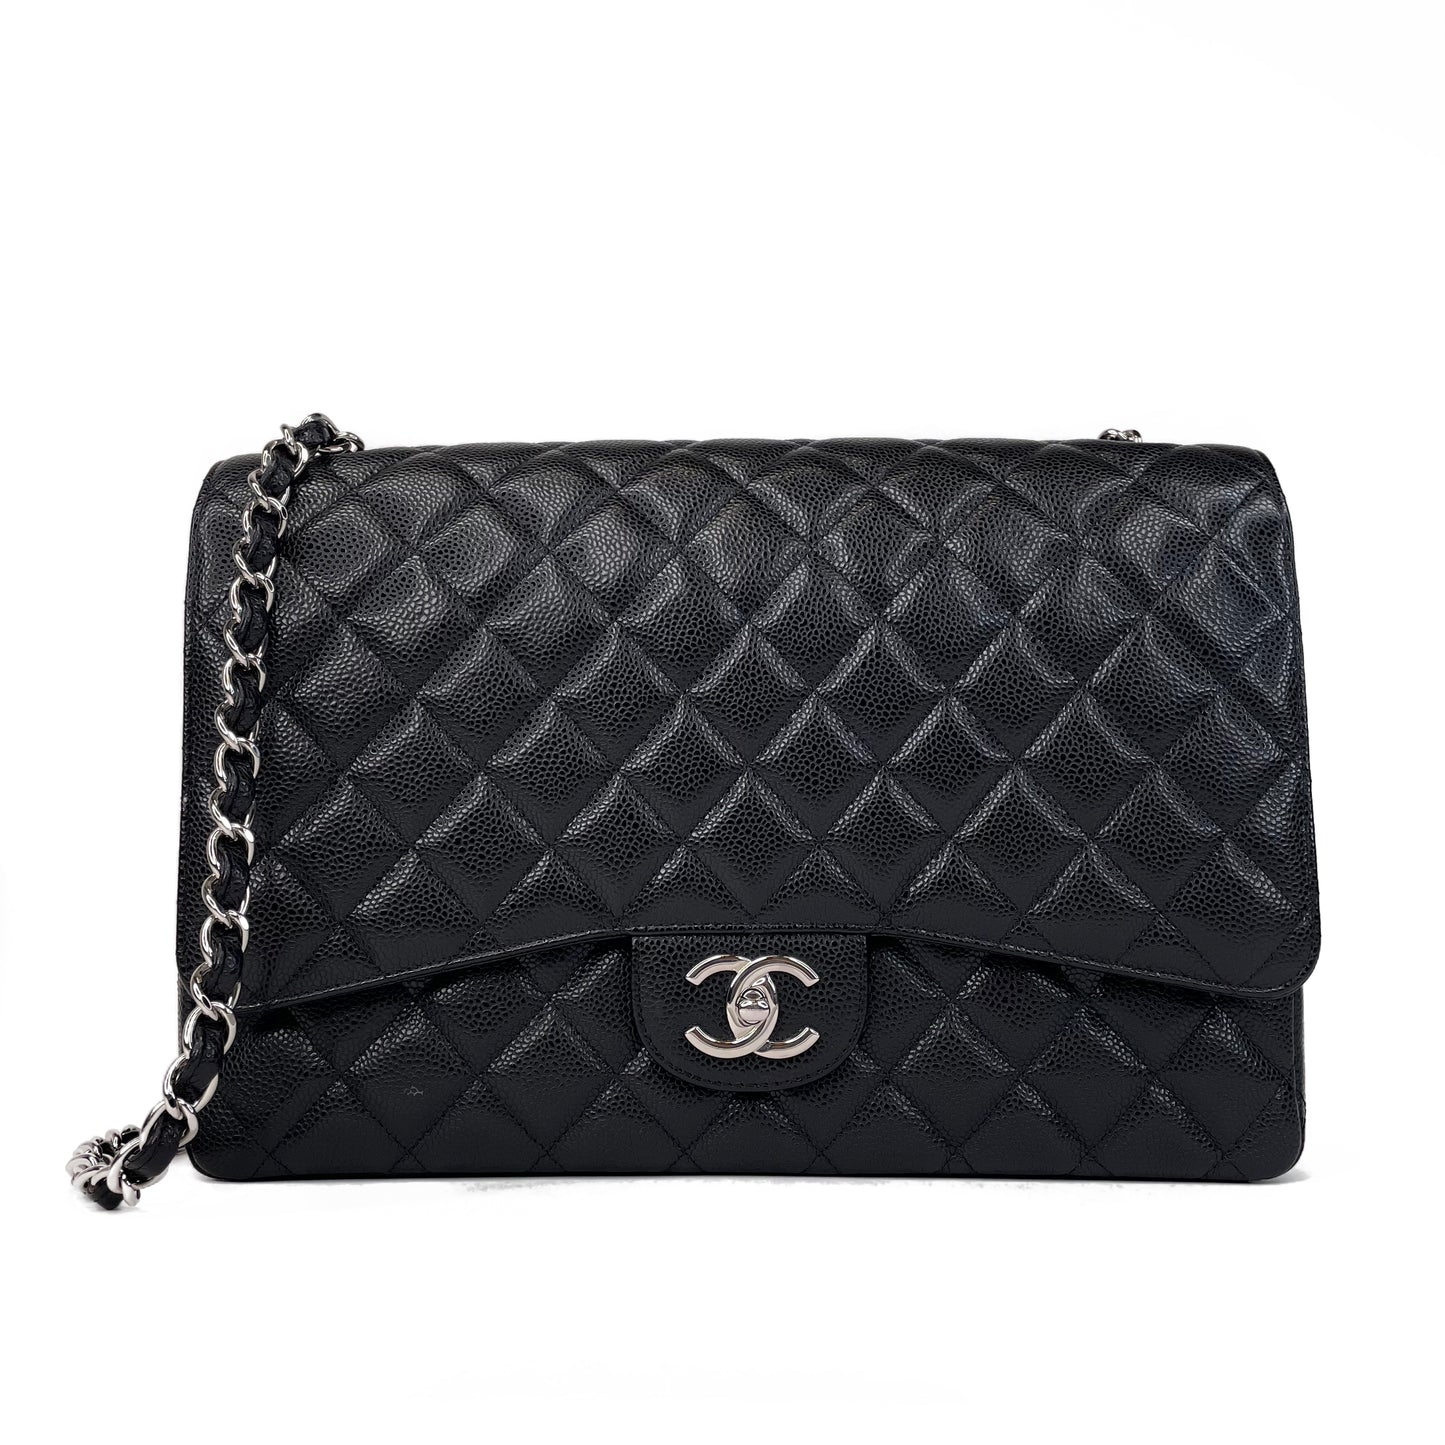 Chanel Double Flap Maxi Bag